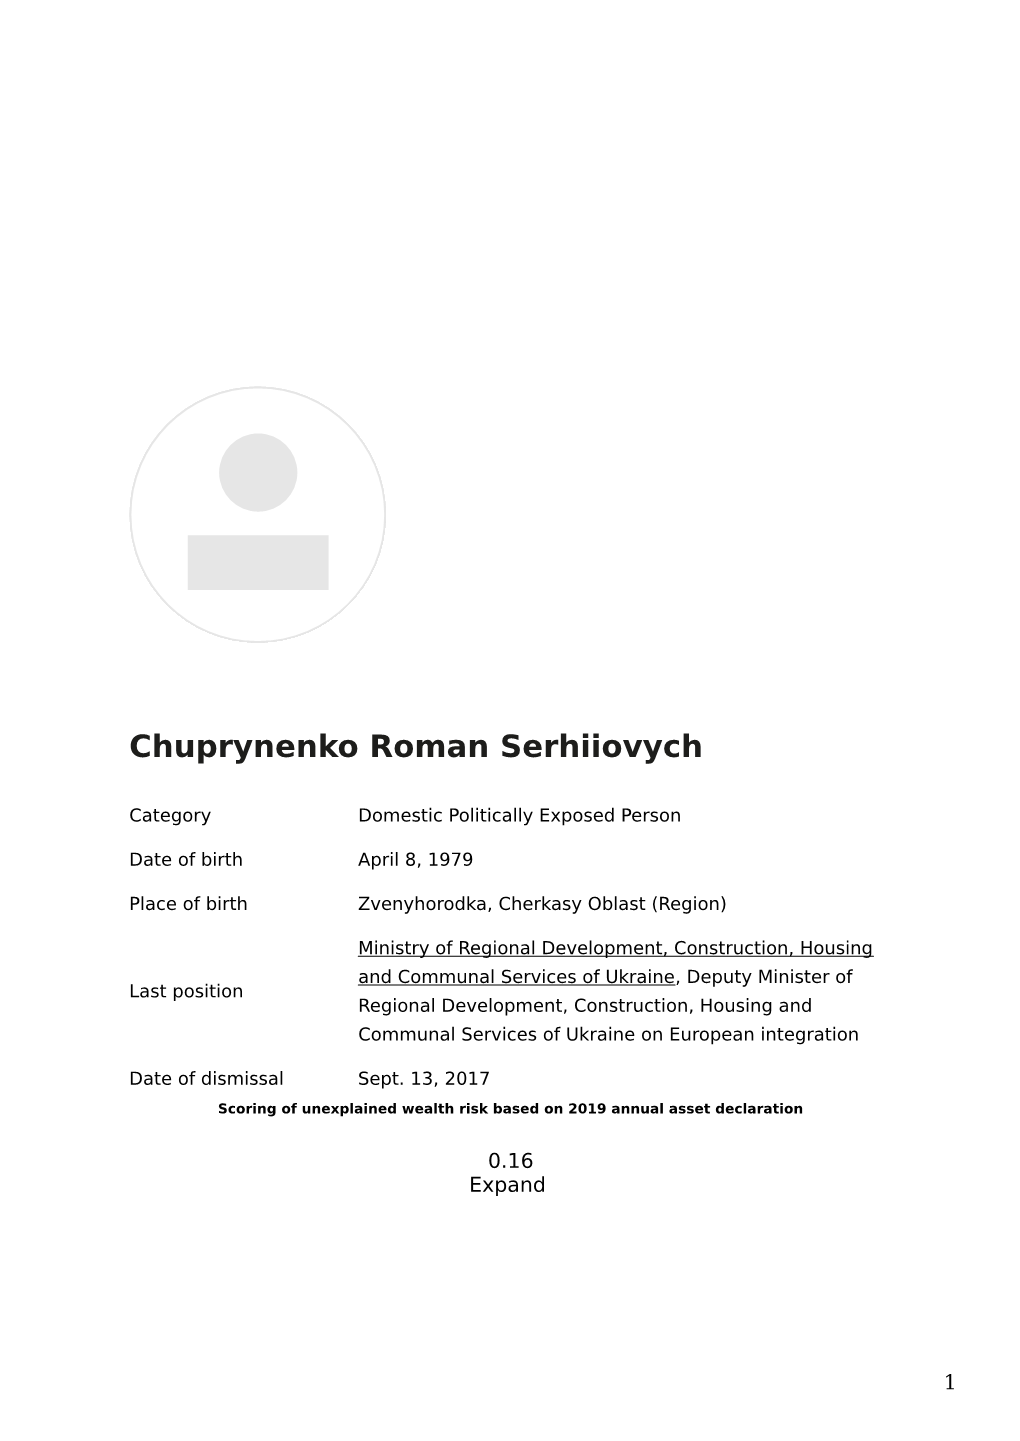 Dossier Chuprynenko Roman Serhiiovych, Ministry of Regional